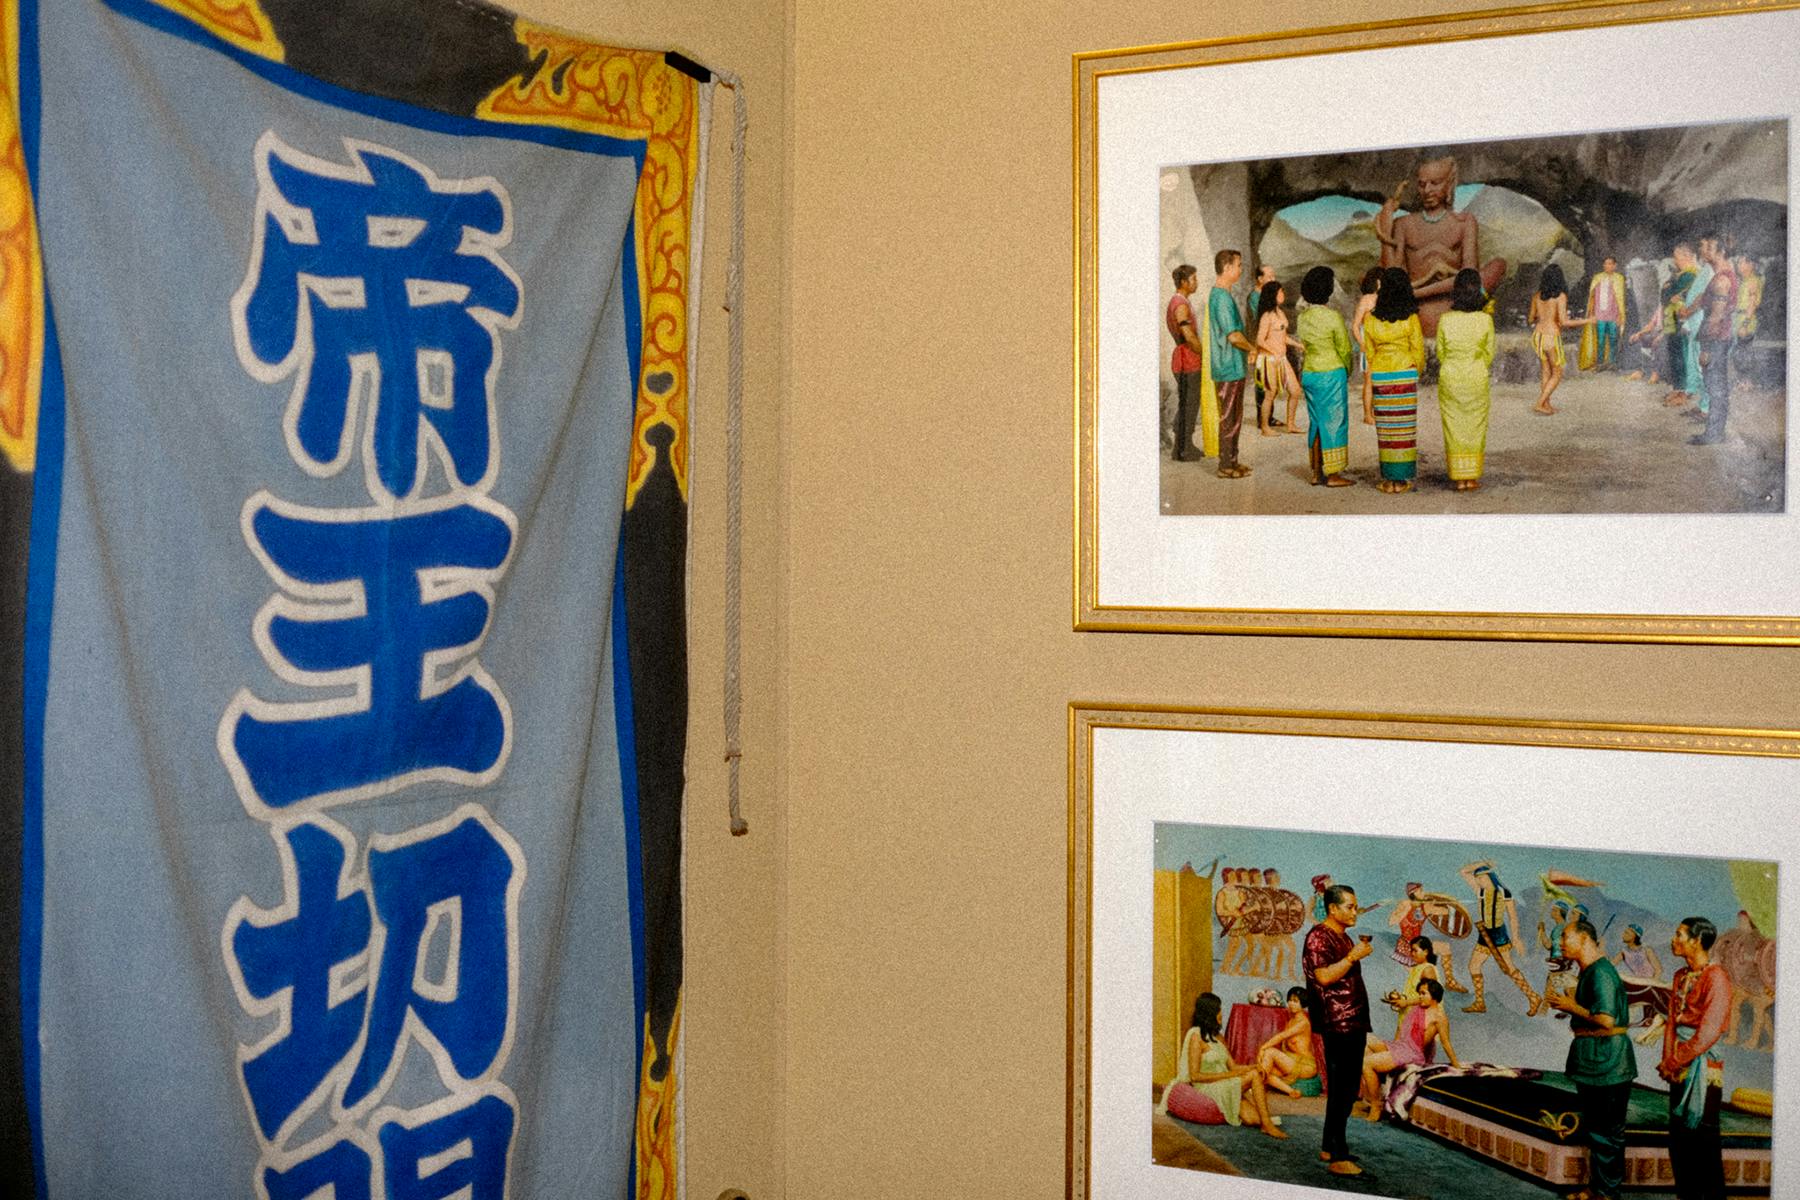 Pieces in Kyoichi Tsuzuki's Collection at the 'Museum of Roadside Art' in Sumida, Tokyo | Photo by Kristen de La Vallière